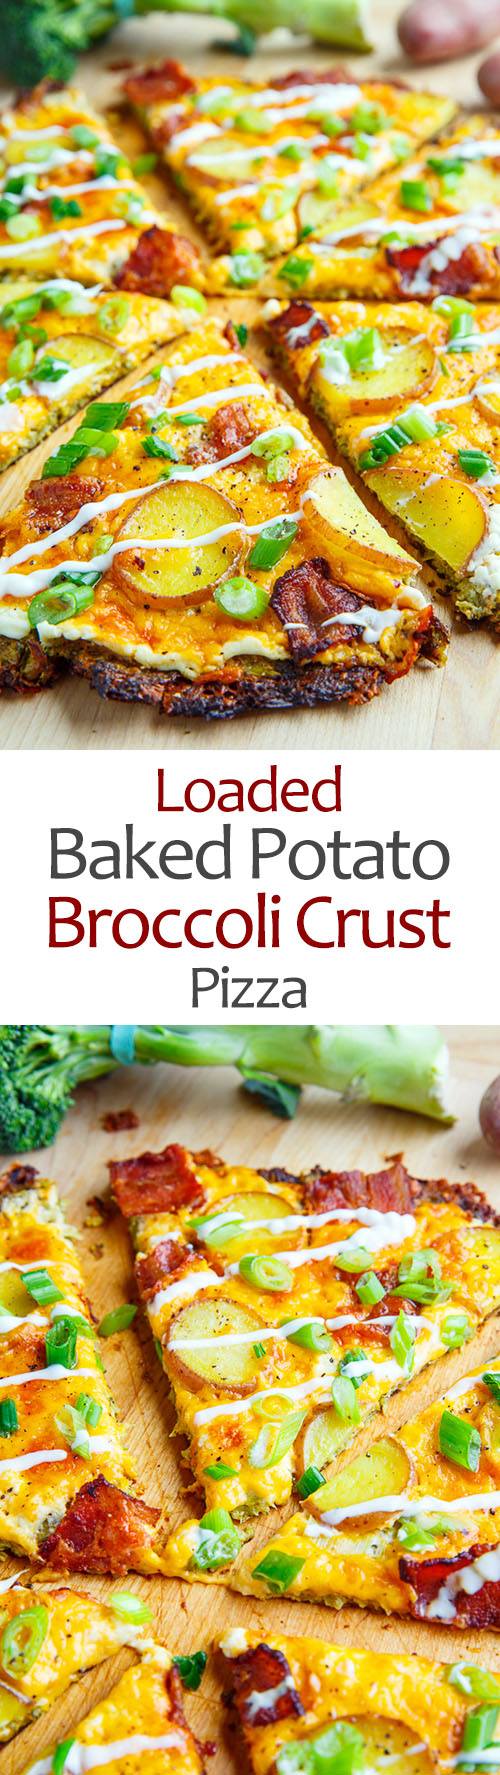 Loaded Baked Potato Broccoli Crust Pizza